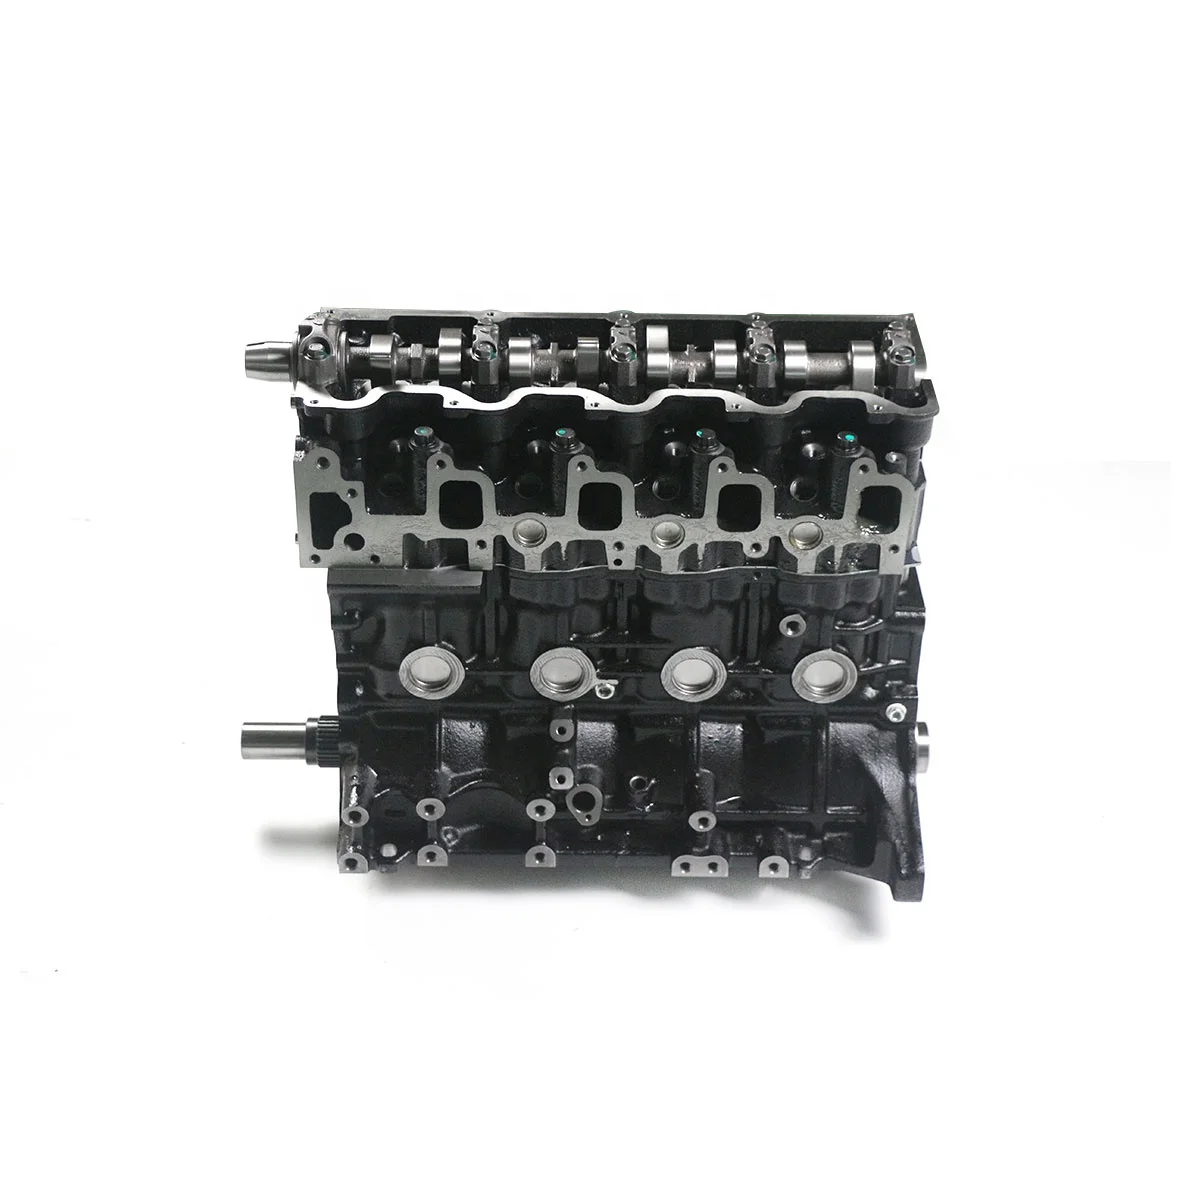 

HEADBOK Engine Long Block 5L 2.8D 4 Cylinder For Car Engine Diesel Engine Cylinder Block Assemblycustom